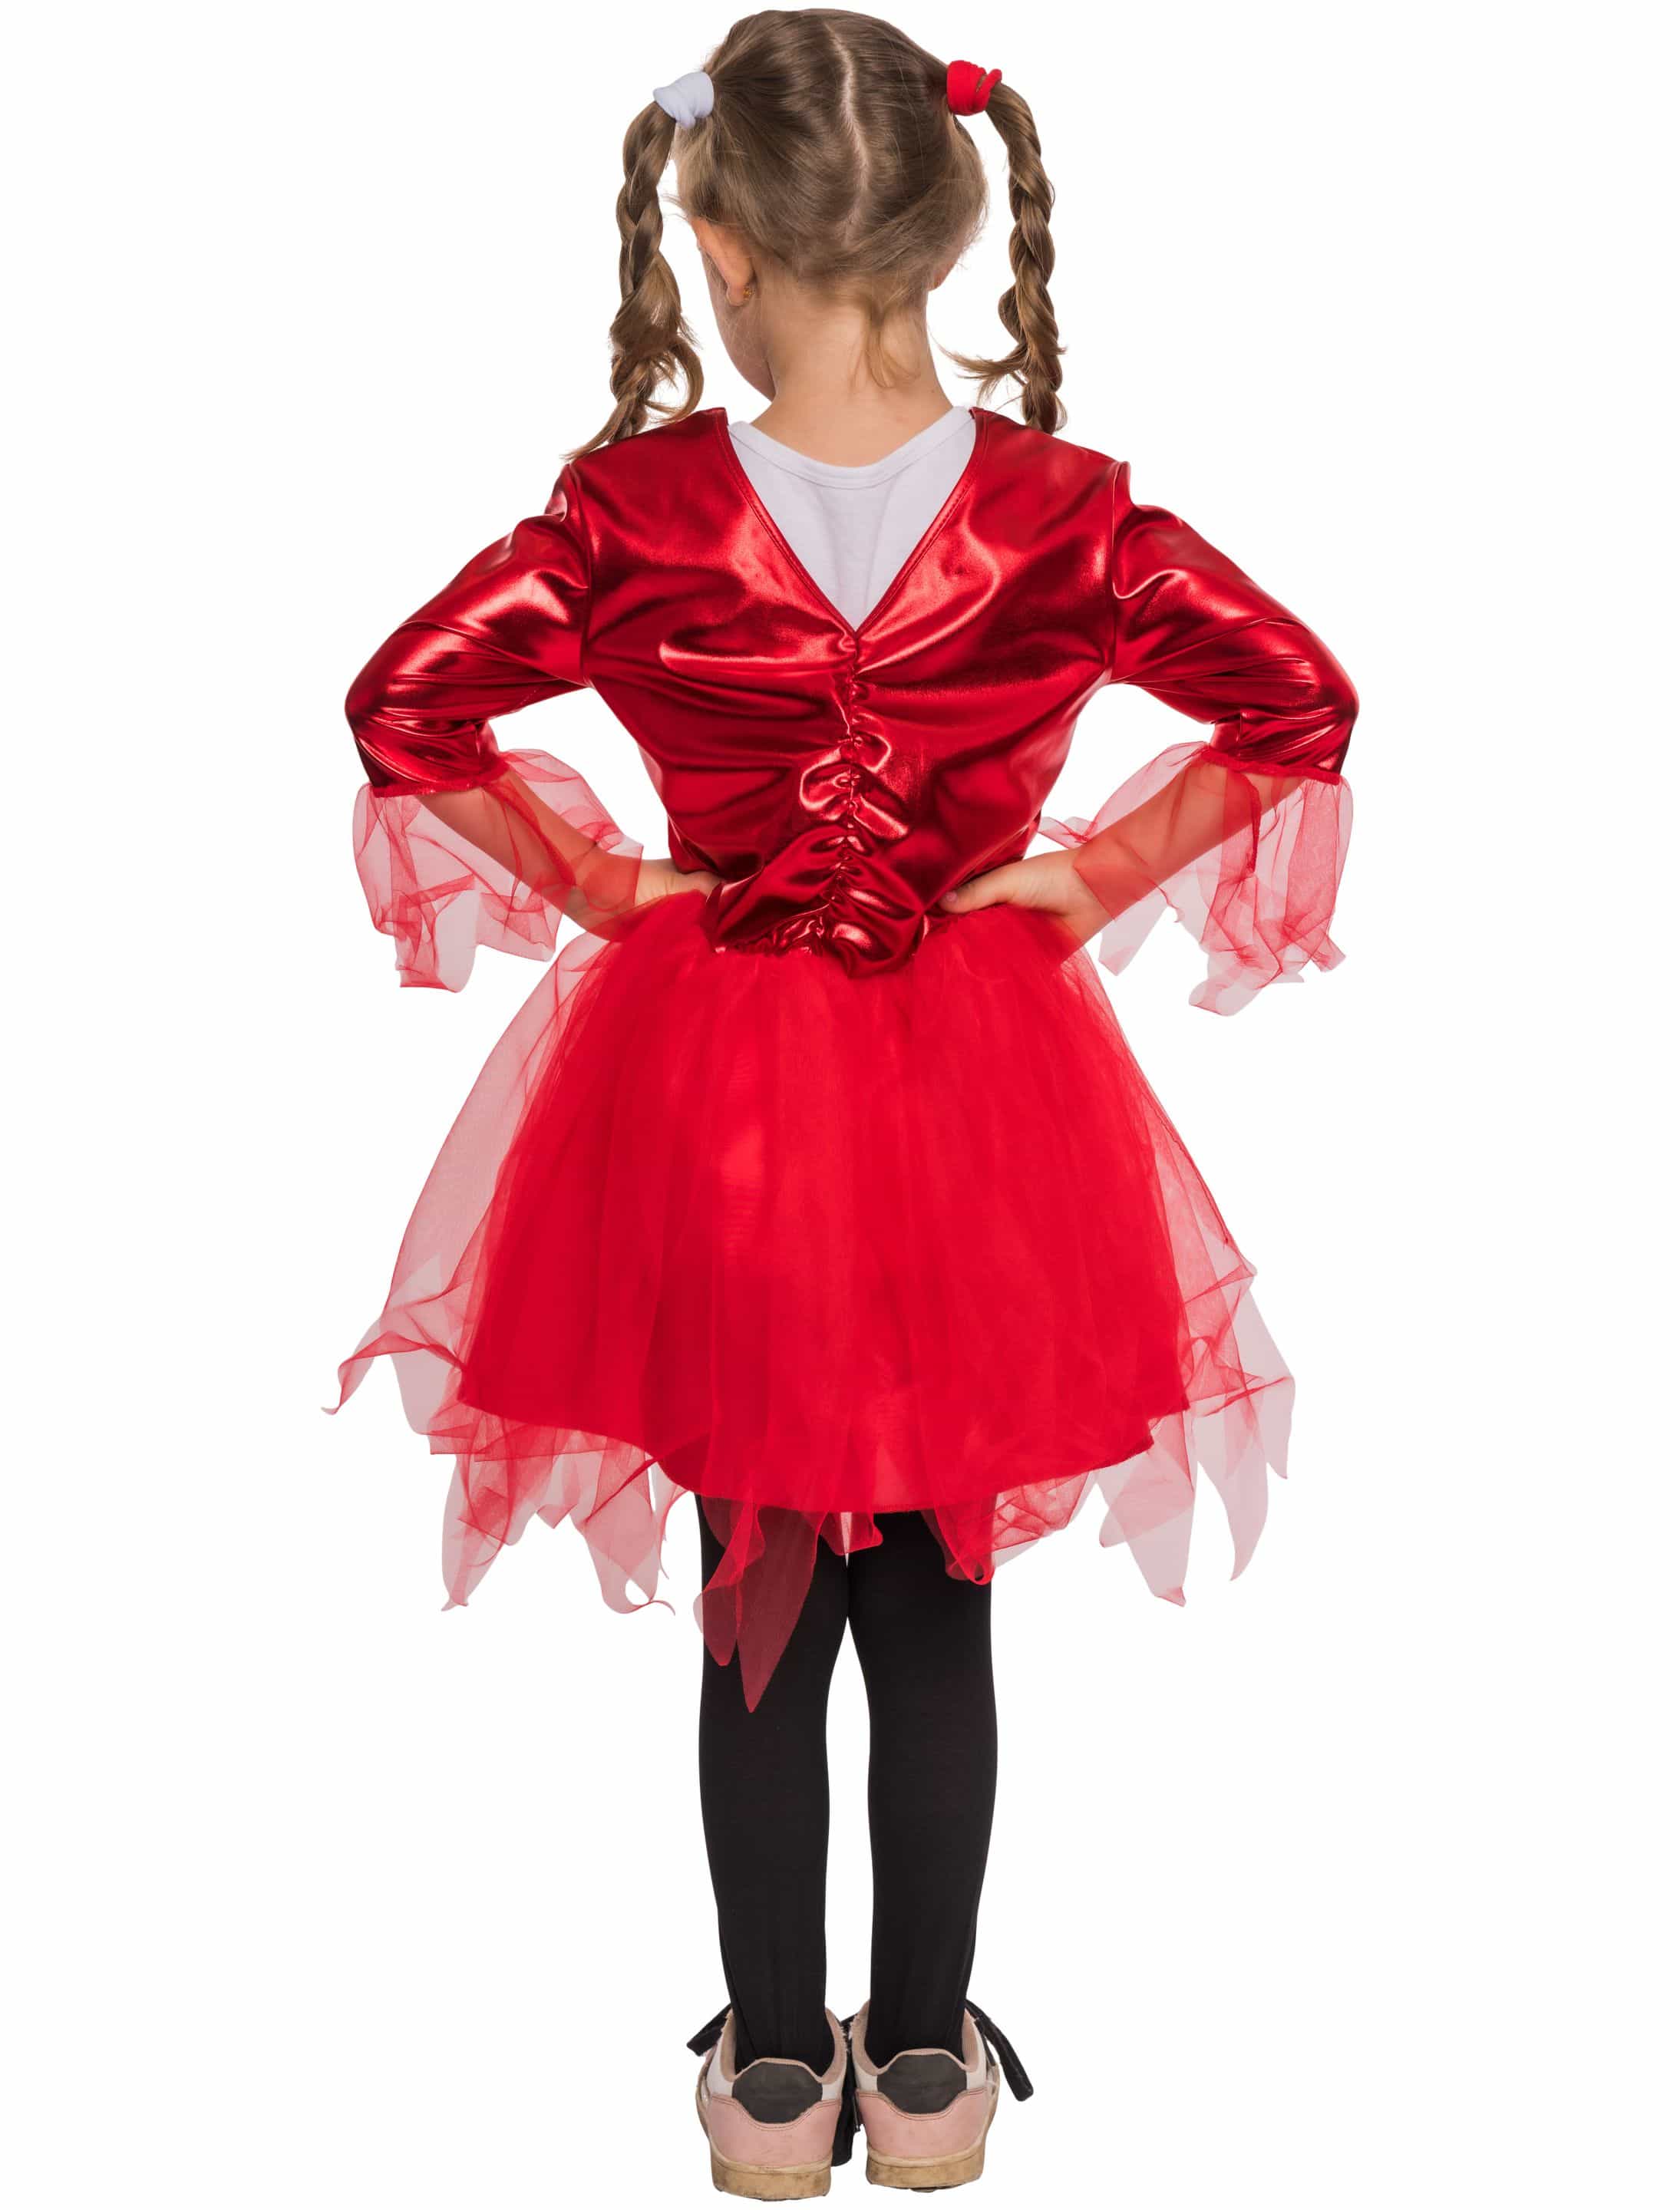 Kleid Teufel metallic mit Tüll  Kinder rot 152